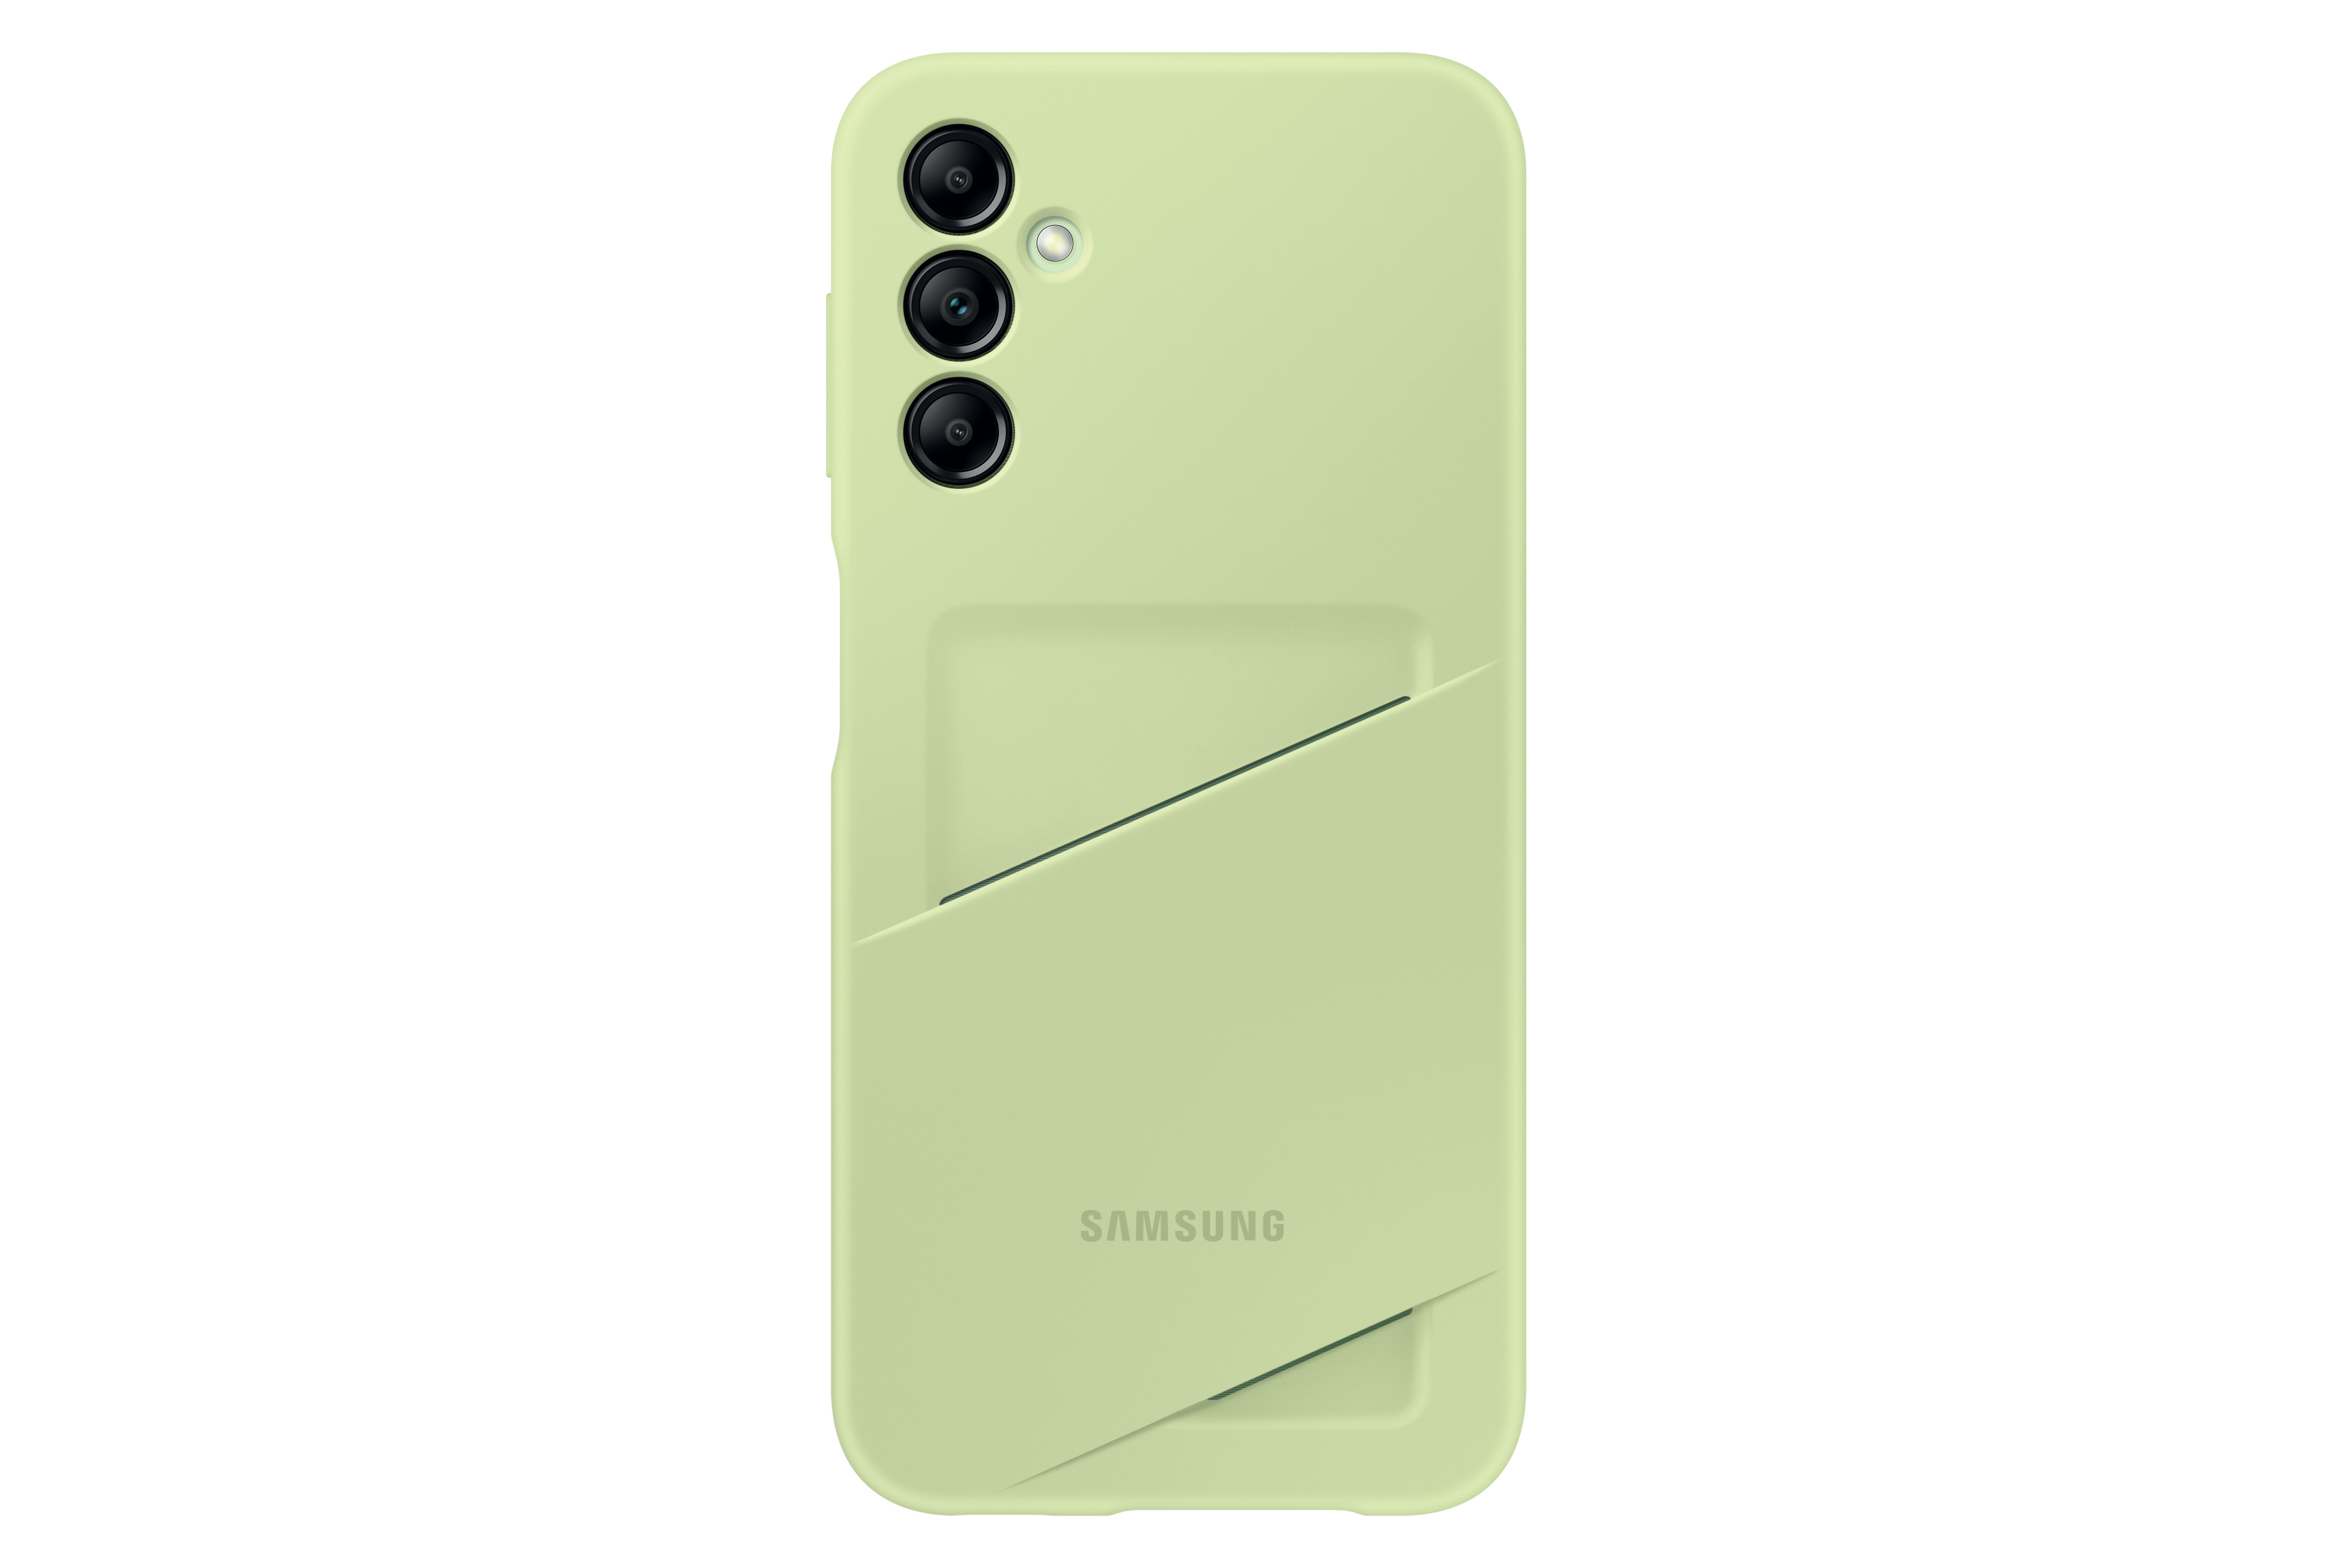 SAMSUNG Lime Case, 5G, Slot A14/A14 Samsung, Backcover, Card Galaxy